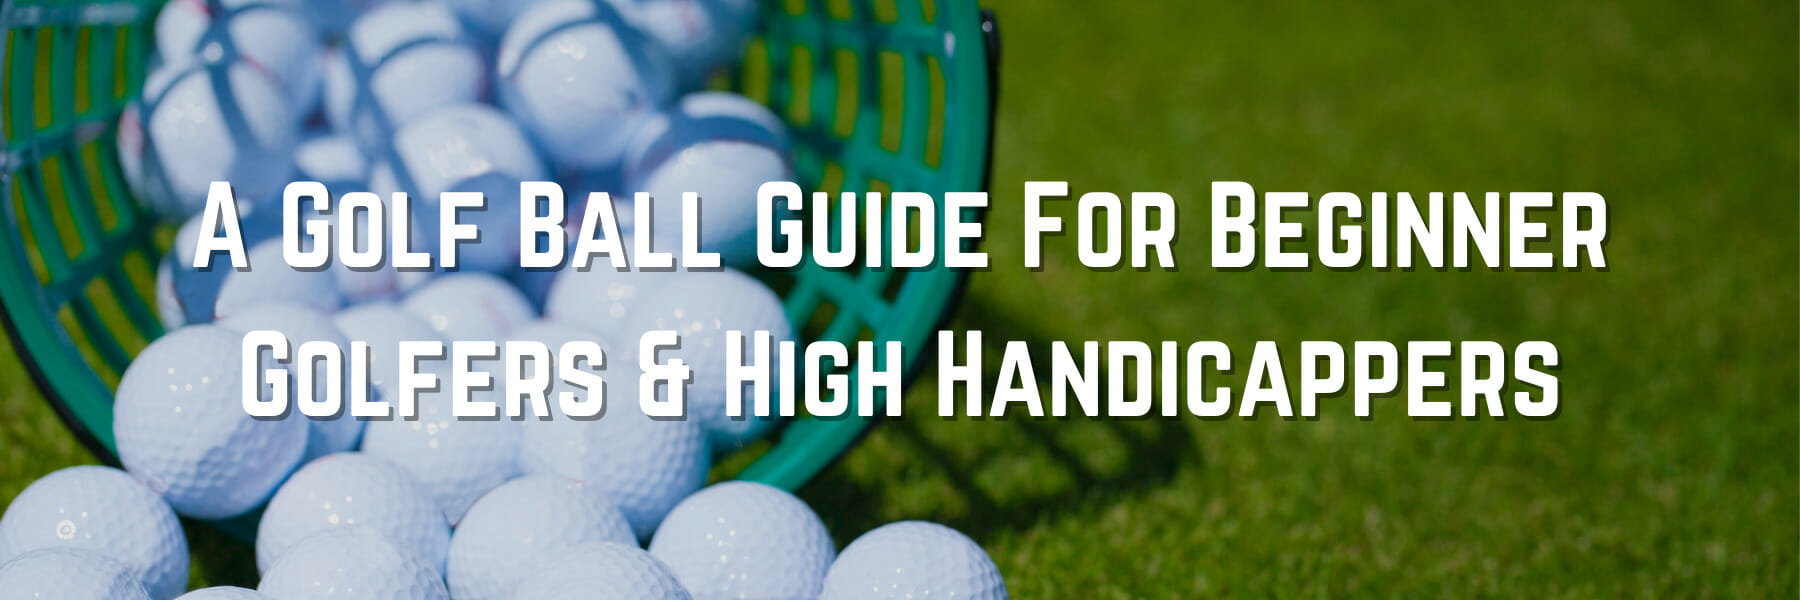 REVIEW: 5 Best Golf Balls For Beginners & High Handicappers